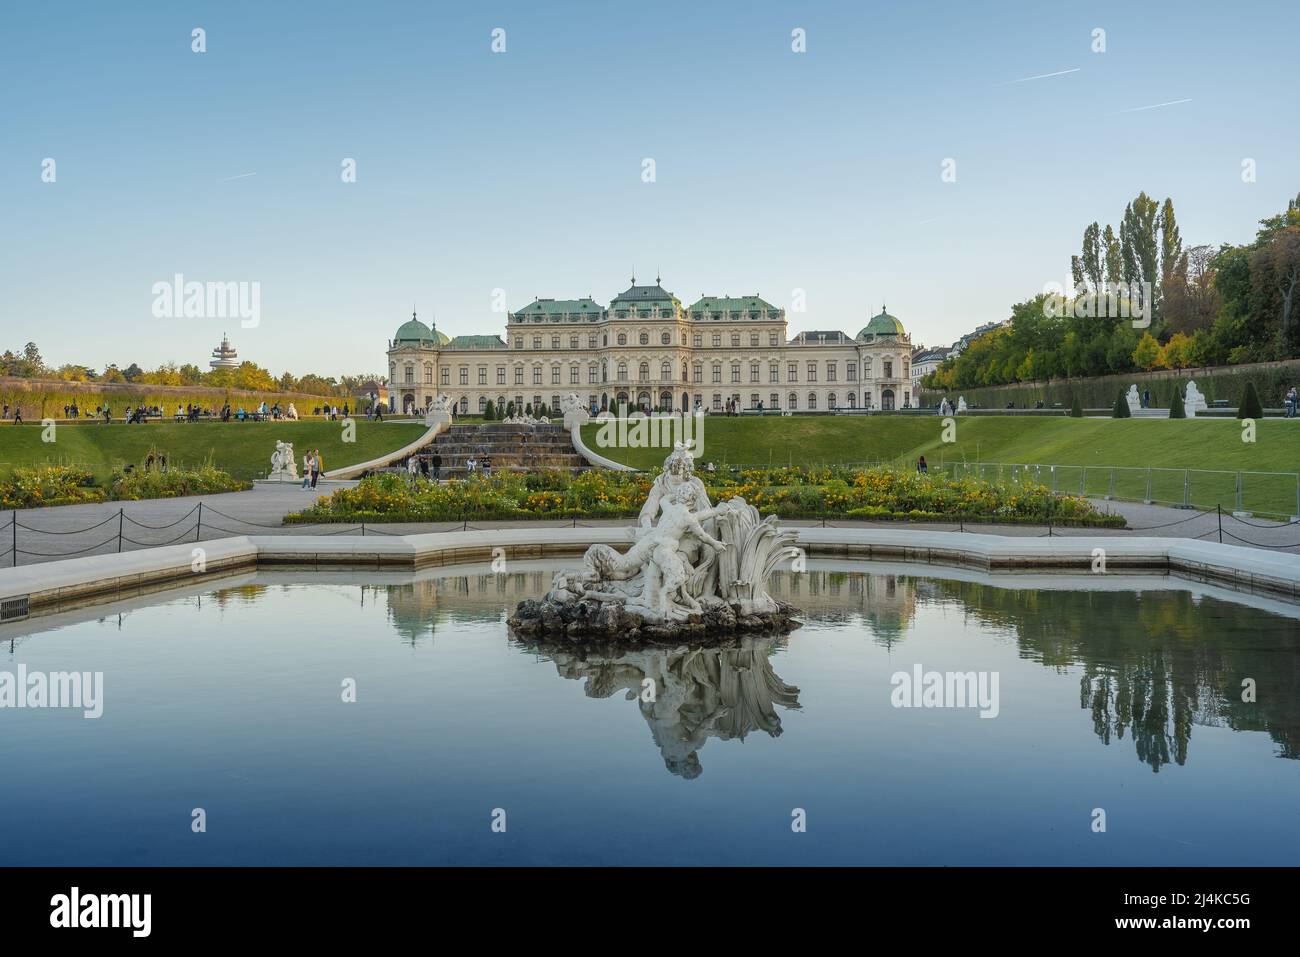 Belvedere Palace Fountains - Vienna, Austria Stock Photo